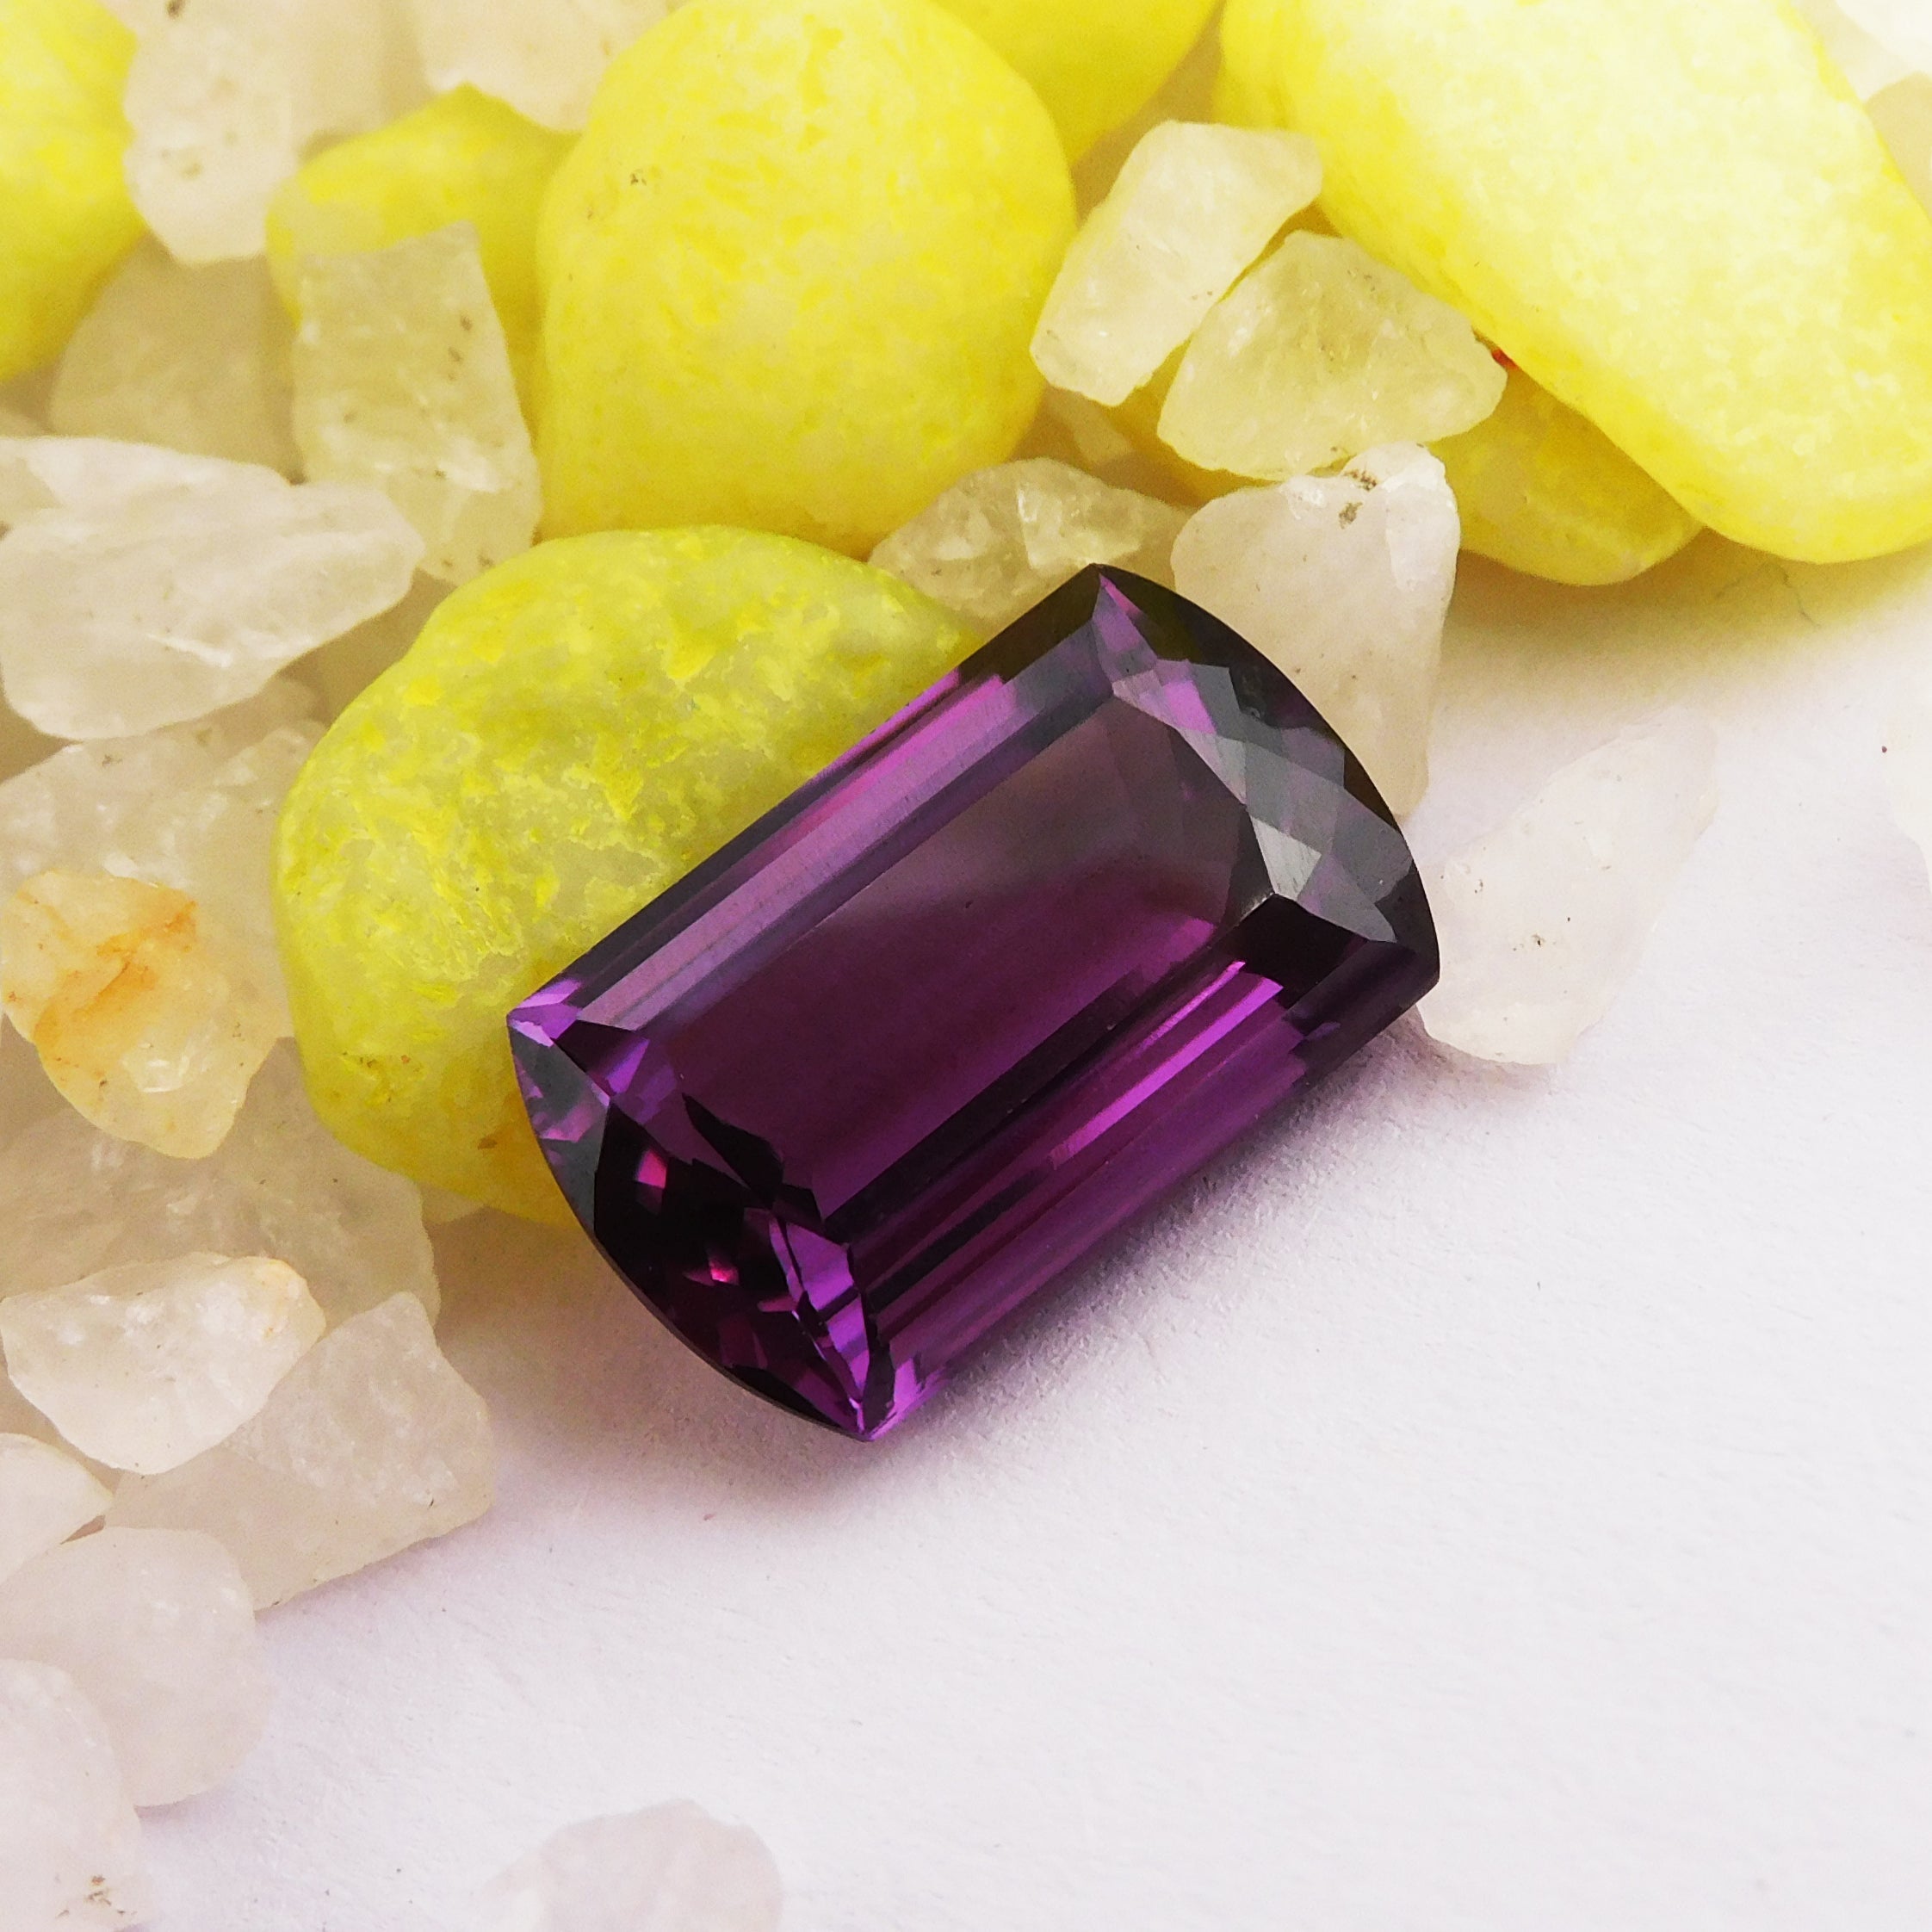 Certified Natural 9.45 Carat Emerald Cut Color Change ALEXANDRITE Loose Gemstone | Russia's Best Glittering Gem | Just Own it